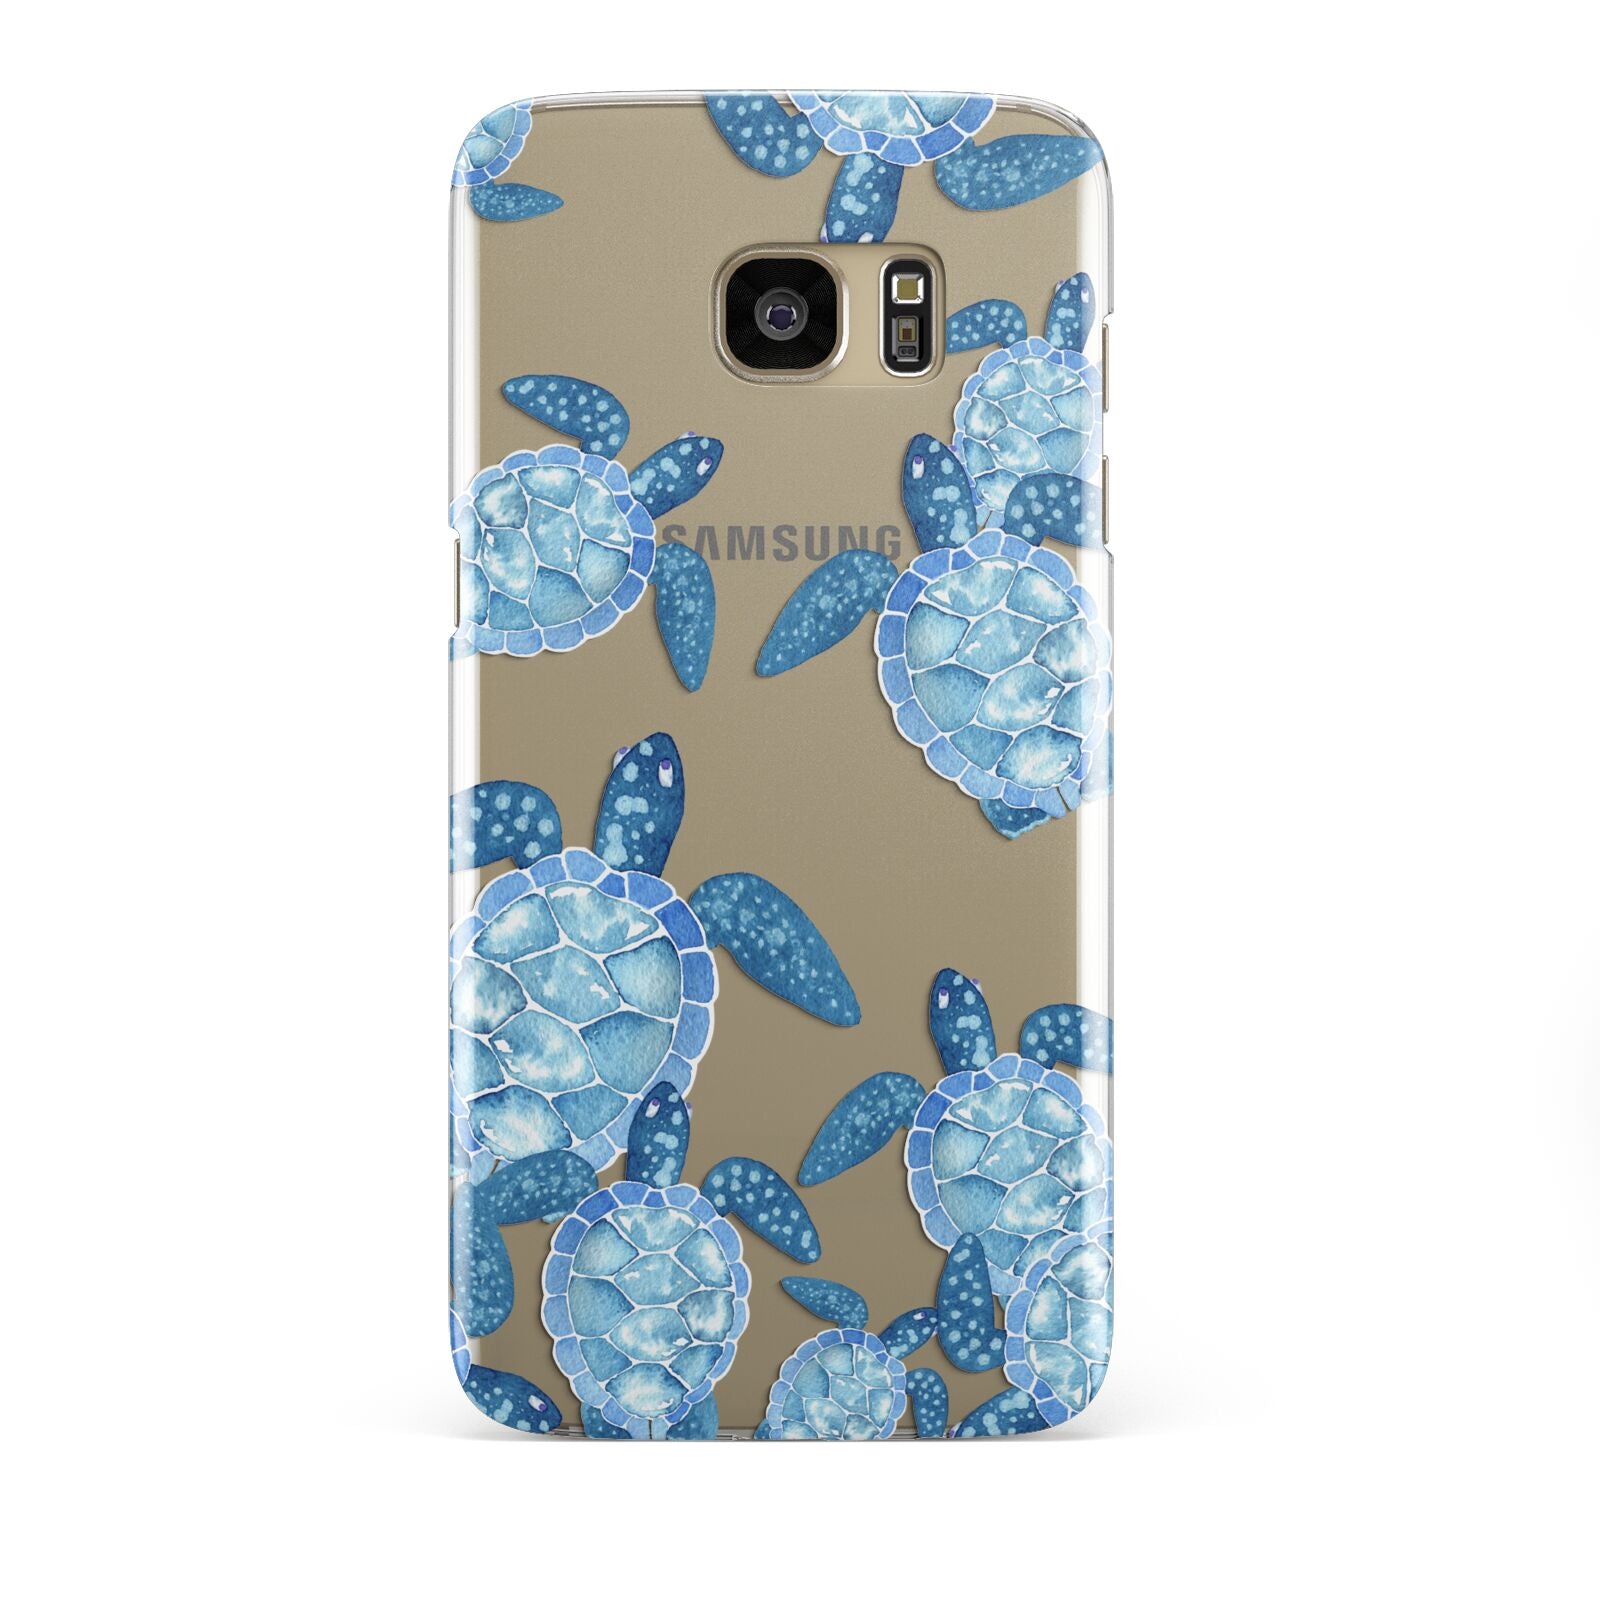 Turtle Samsung Galaxy S7 Edge Case